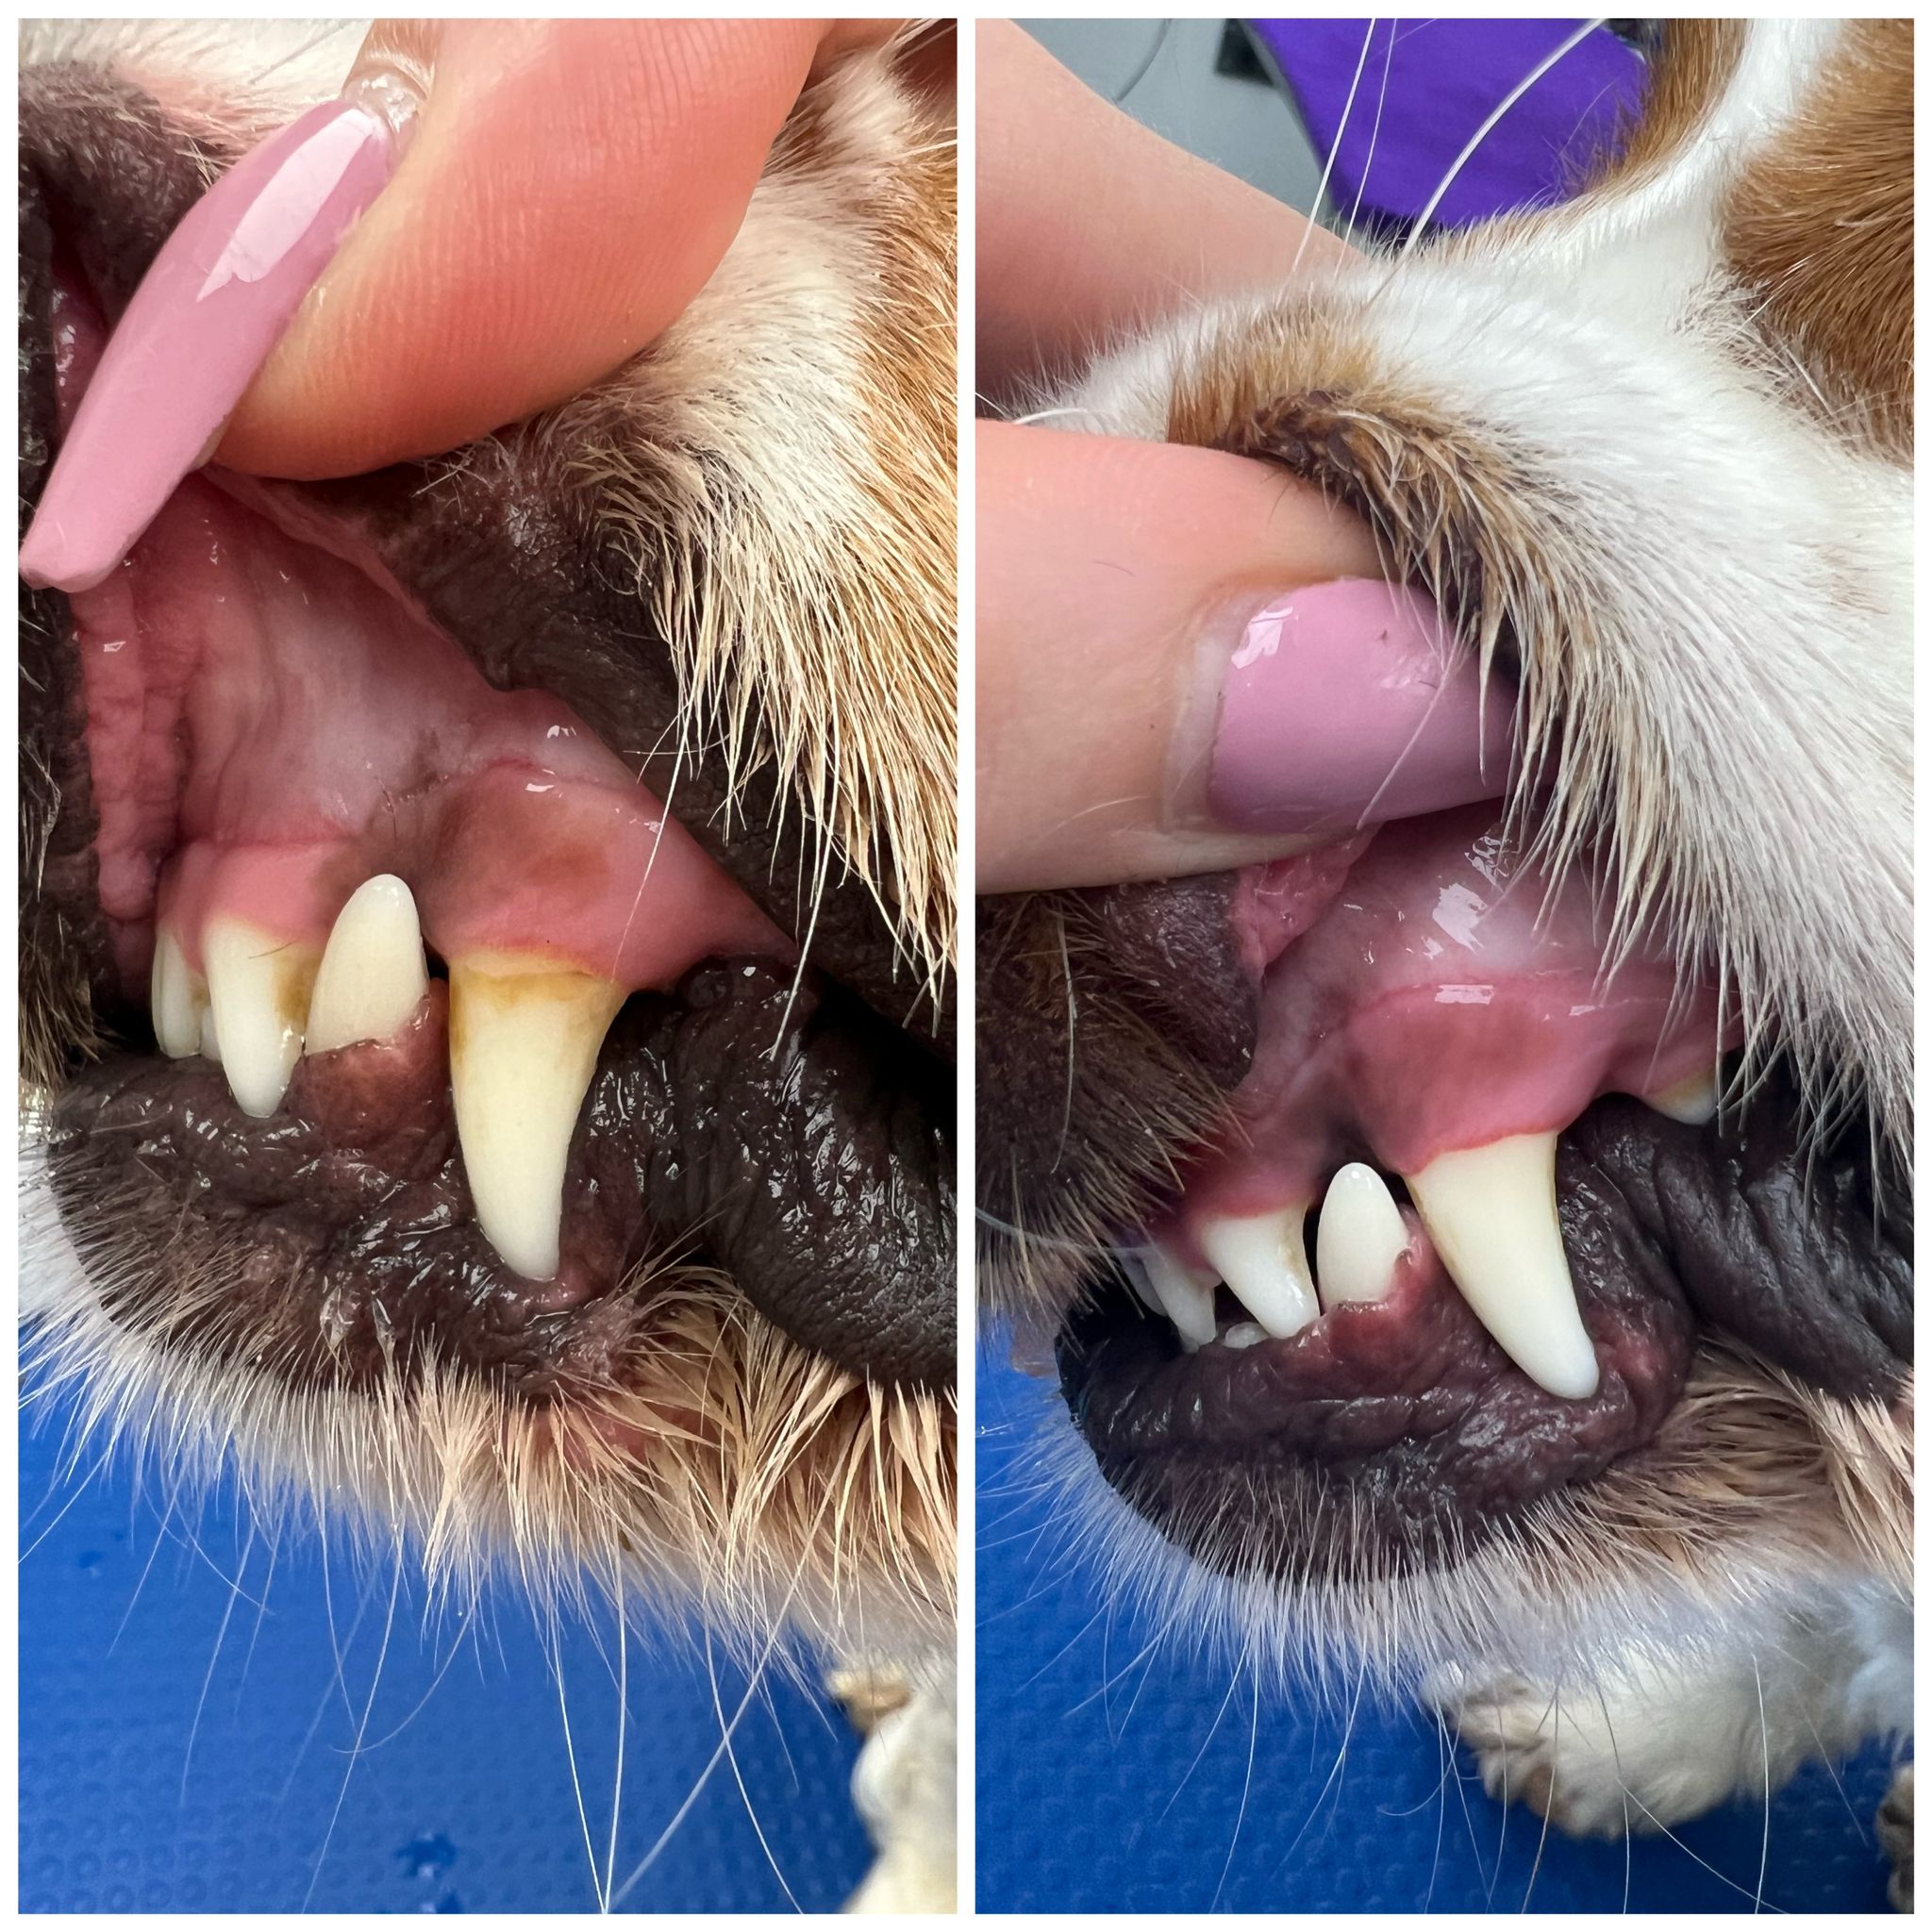 Doggy Dental Health - My Best Friend Dog Grooming